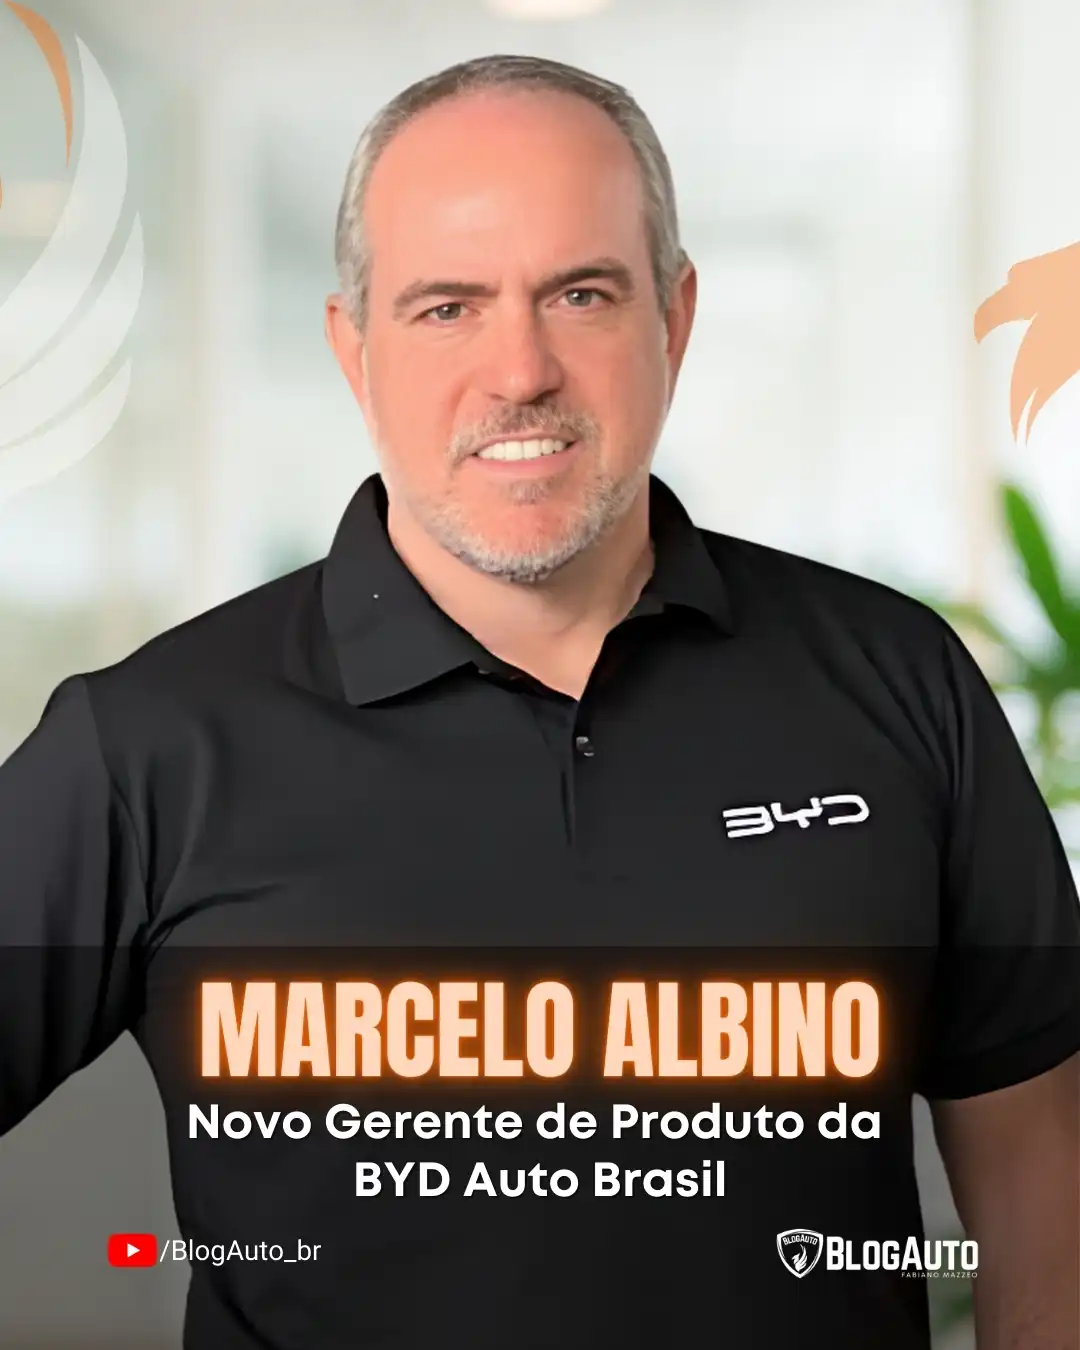 Marcelo Albino